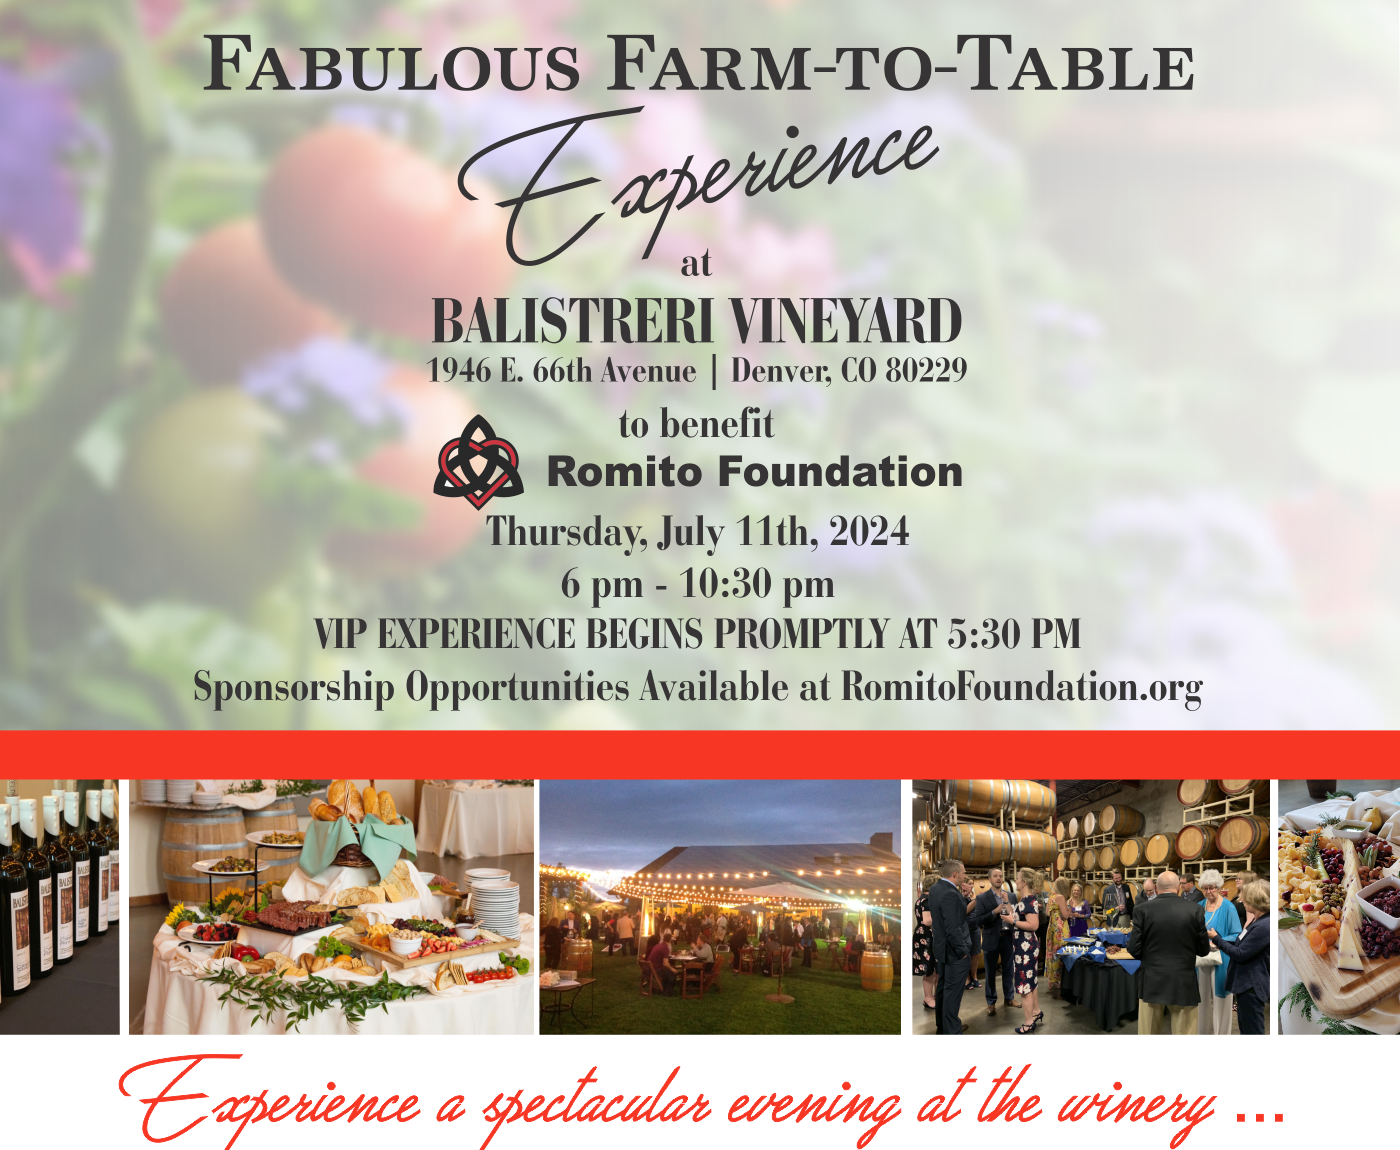 Fabulous Farm to Table Experience at Balistreri Vineyard Thursday, July 11th